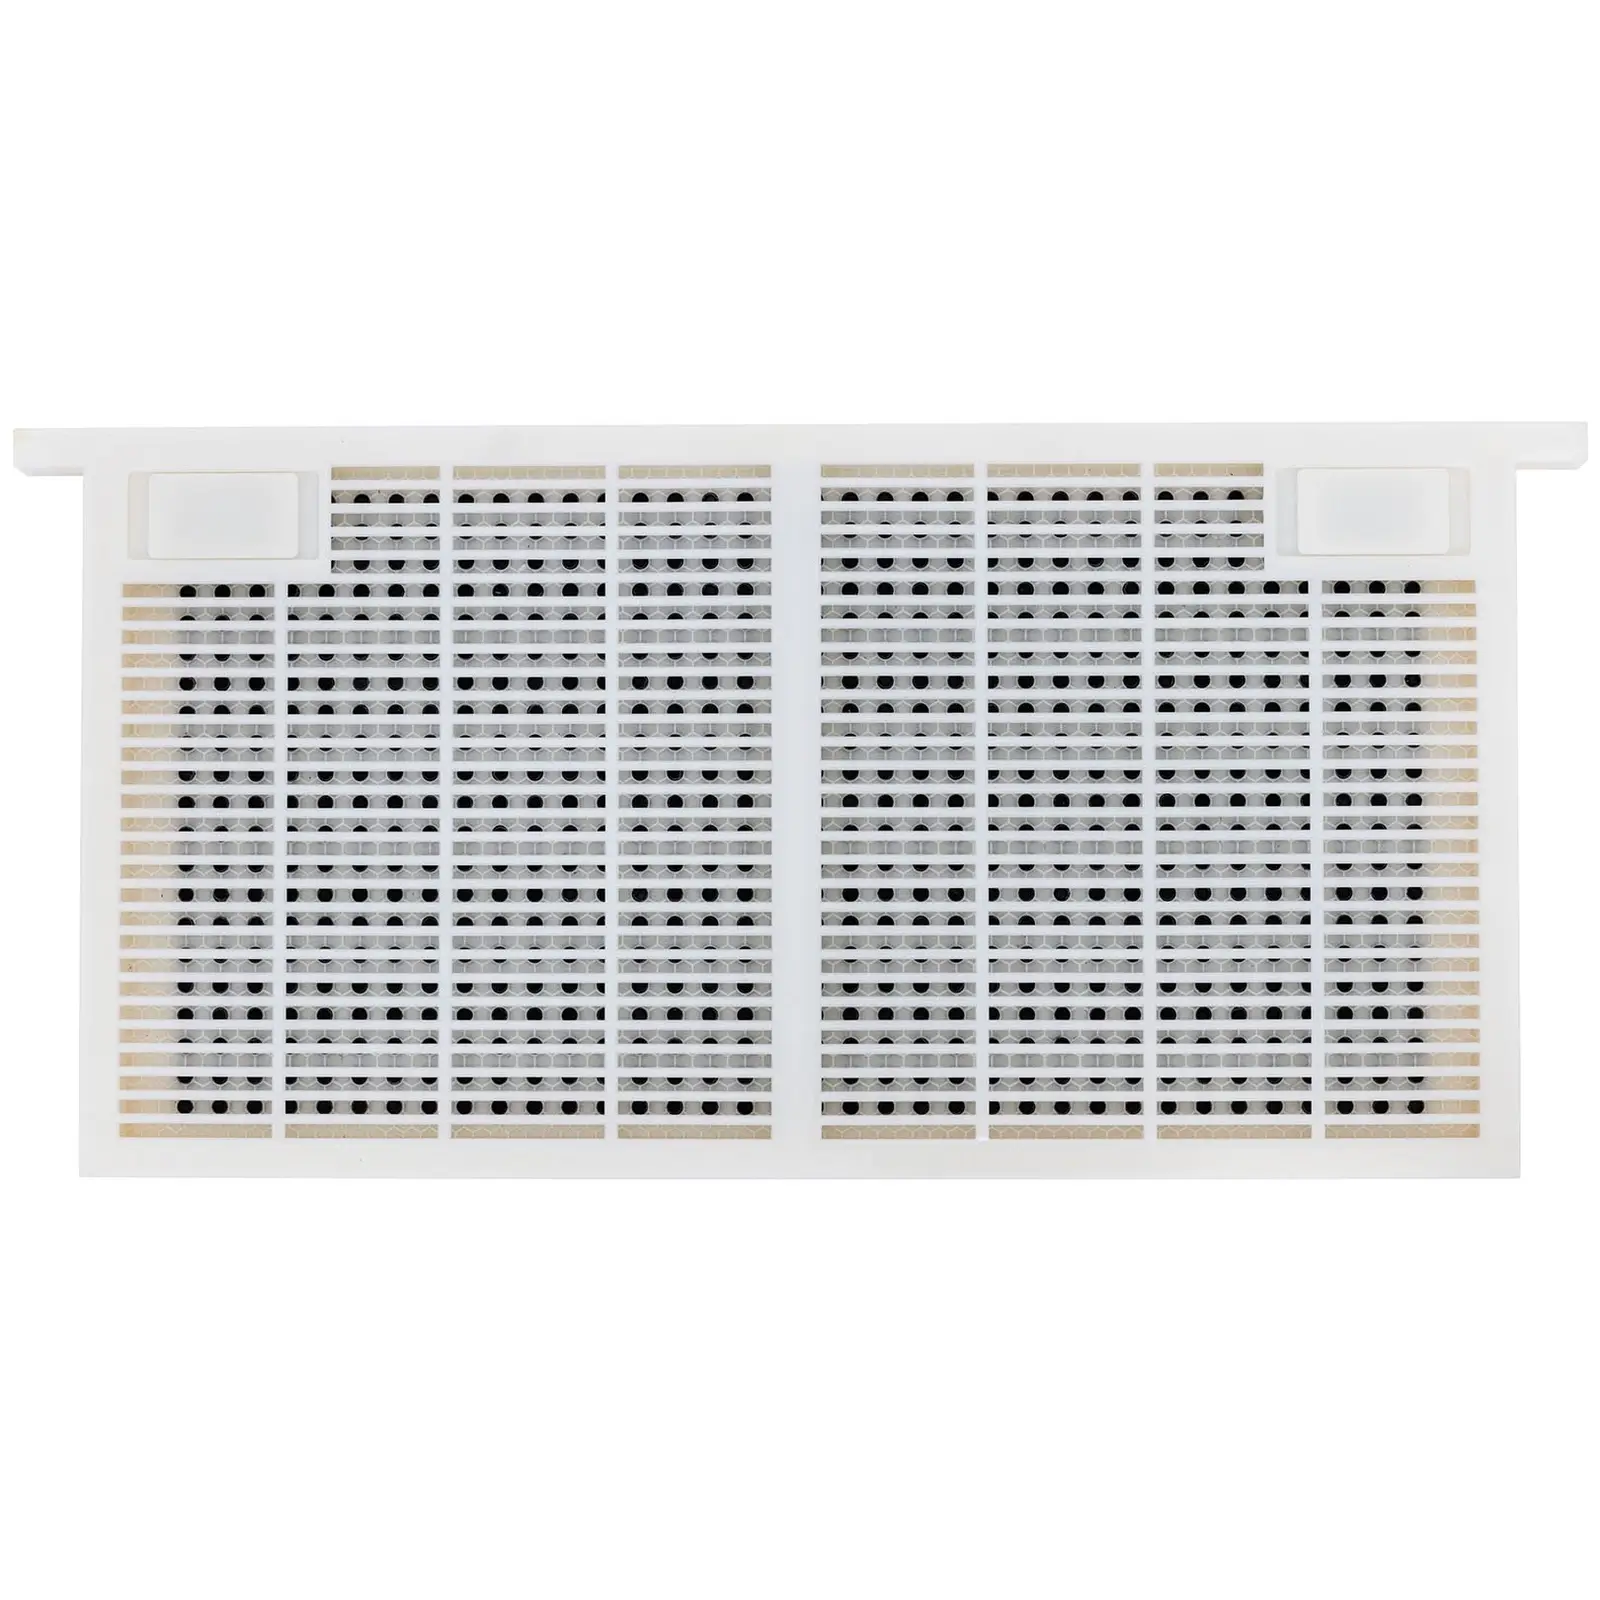 Kit per allevamento ape regina - Plastica - 483 x 232 x 42 mm